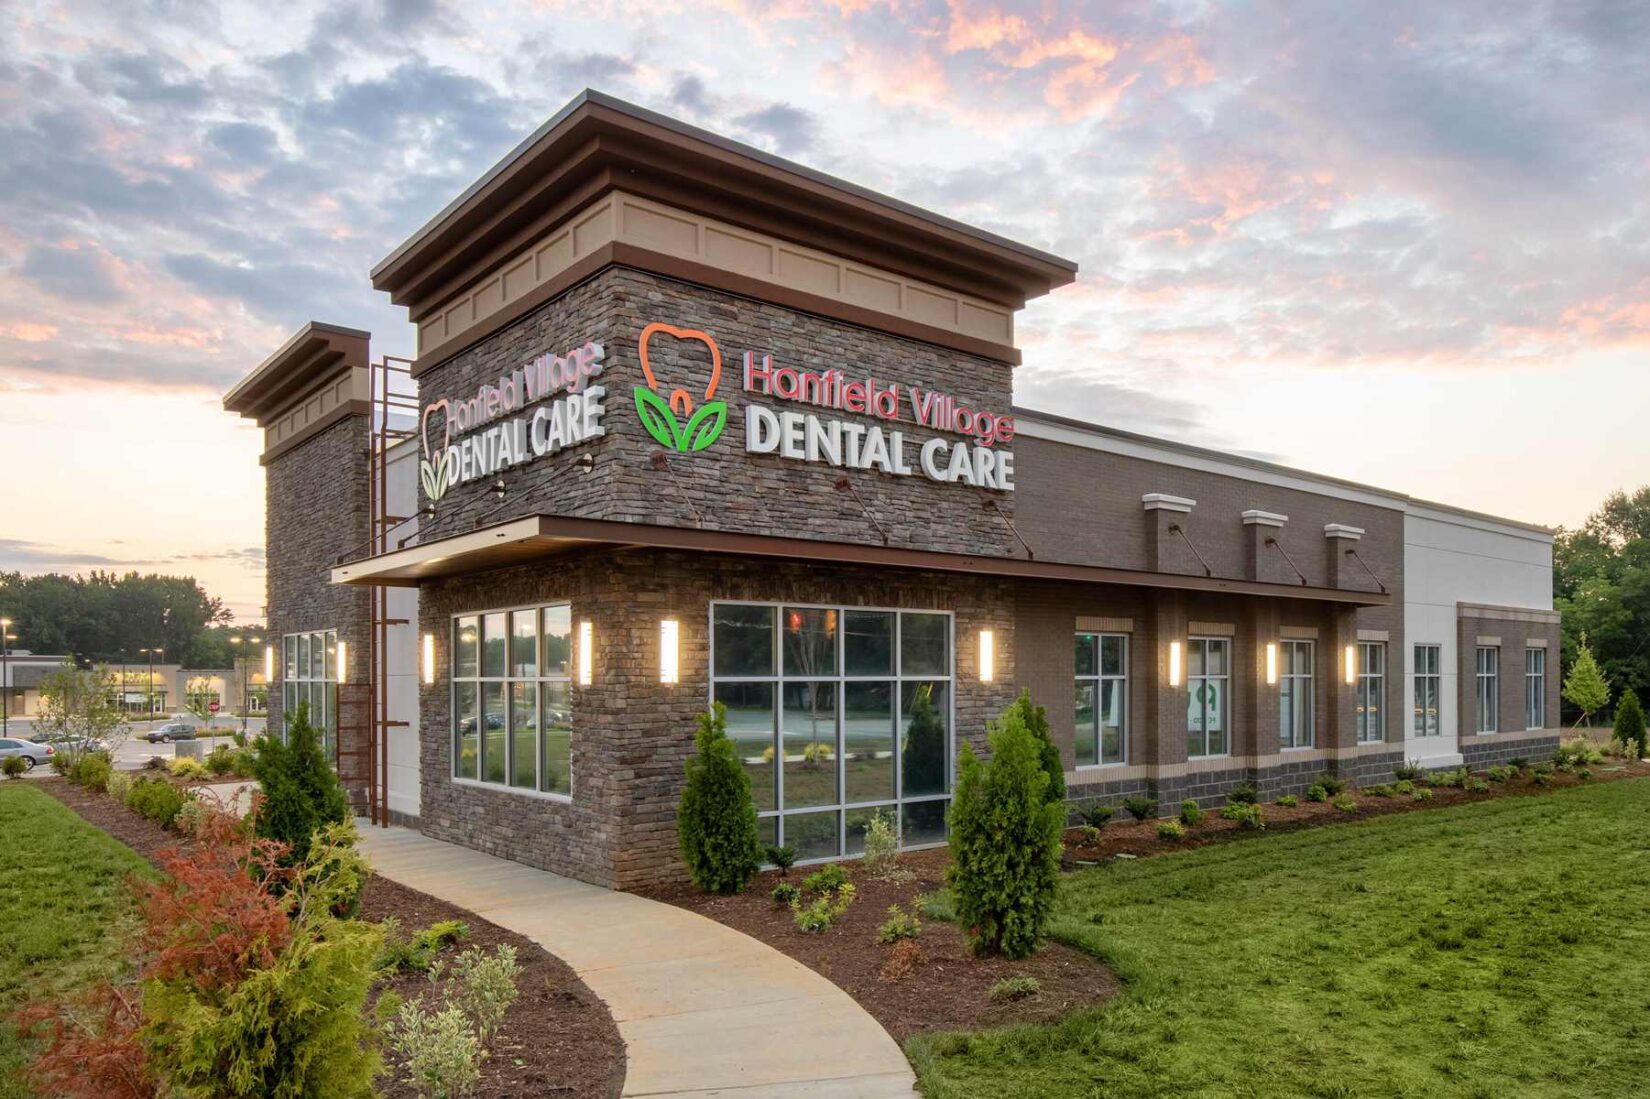 Hanfield Village Dental Care Exterior